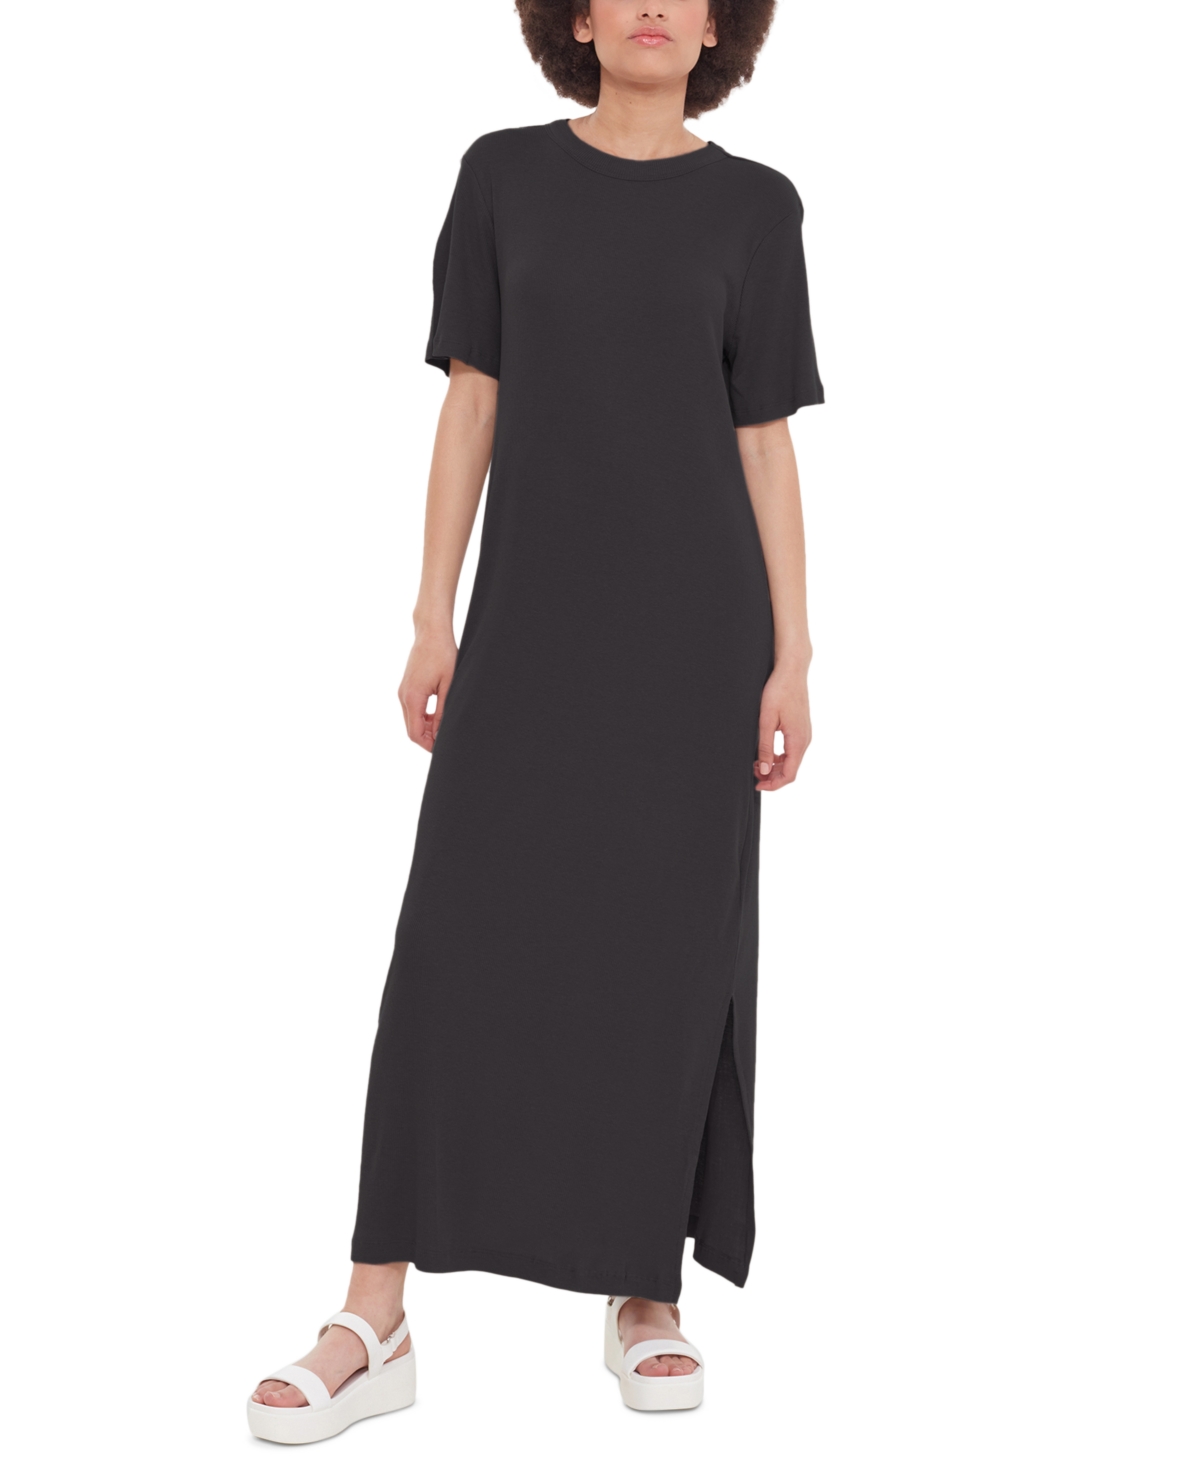 Black Tape Women's Elbow-Sleeve Side-Slit T-Shirt Dress